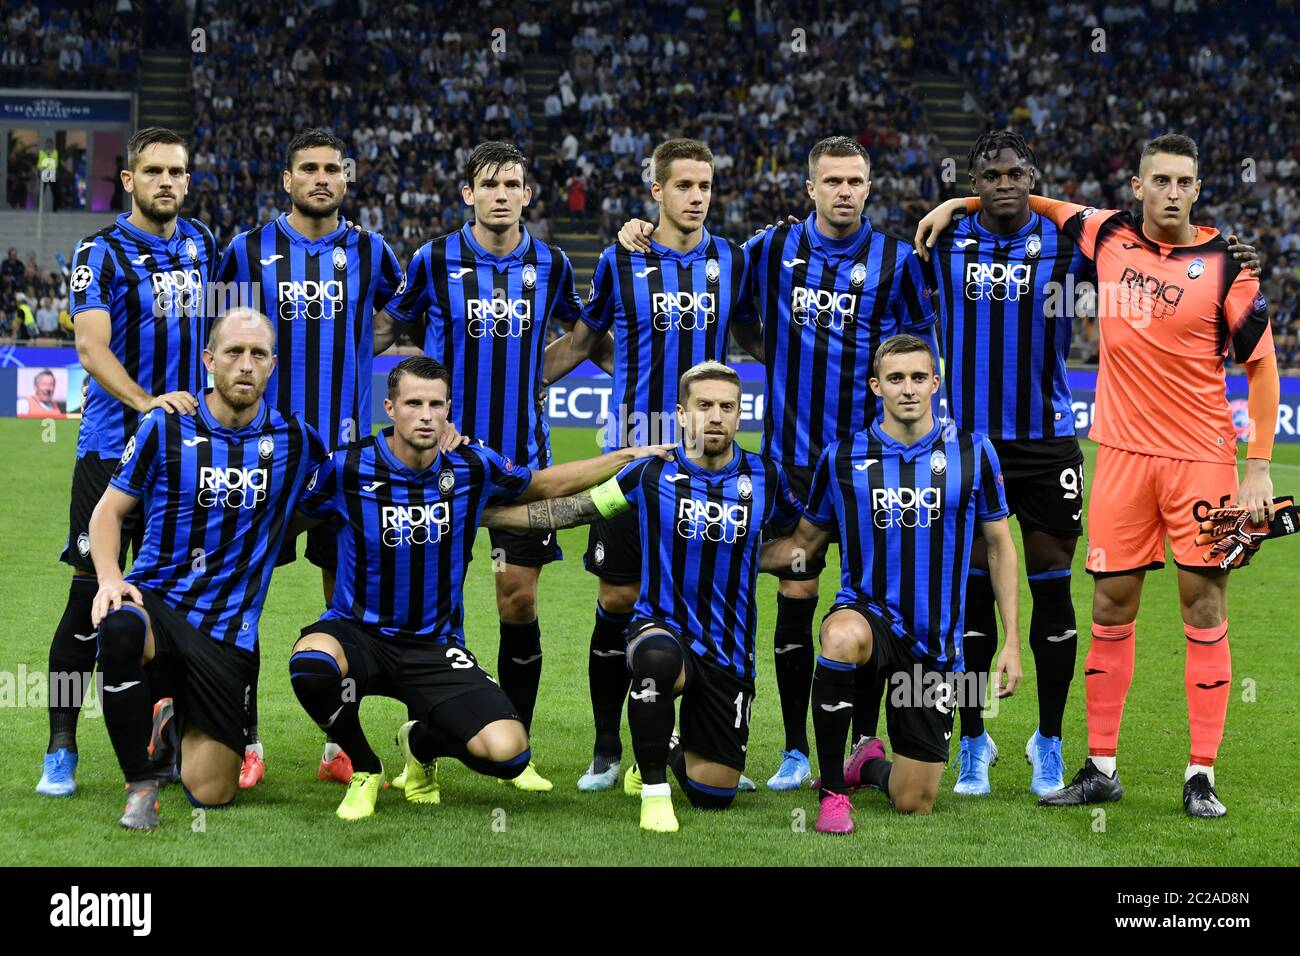 Atalanta's soccer team photo, during the UEFA Champions League match, Atalanta vs Shakhtar Donetsk, in Milan. Stock Photo